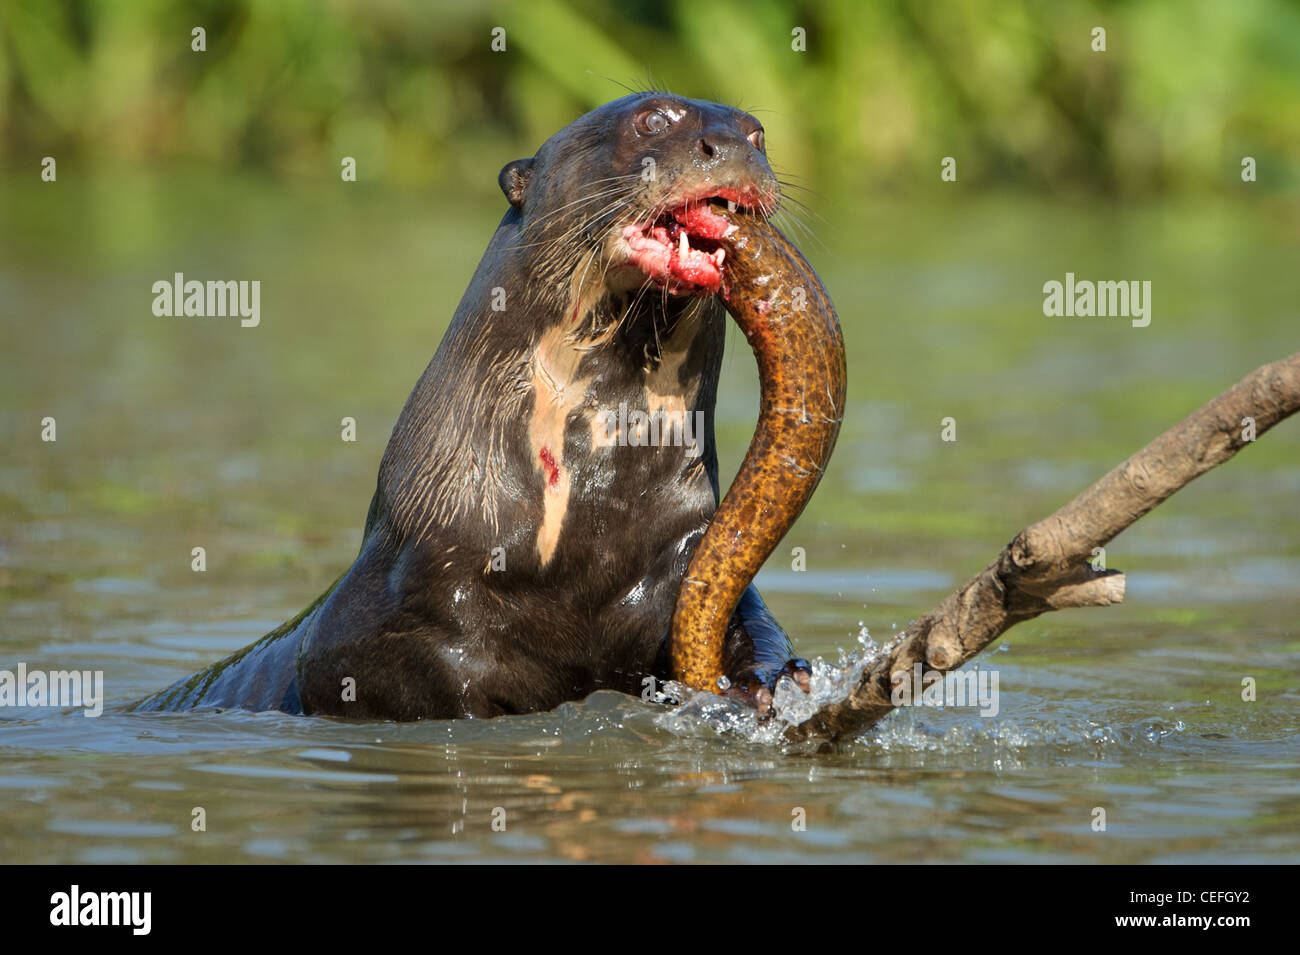 A wild Giant River Otter feeding on fish Stock Photo